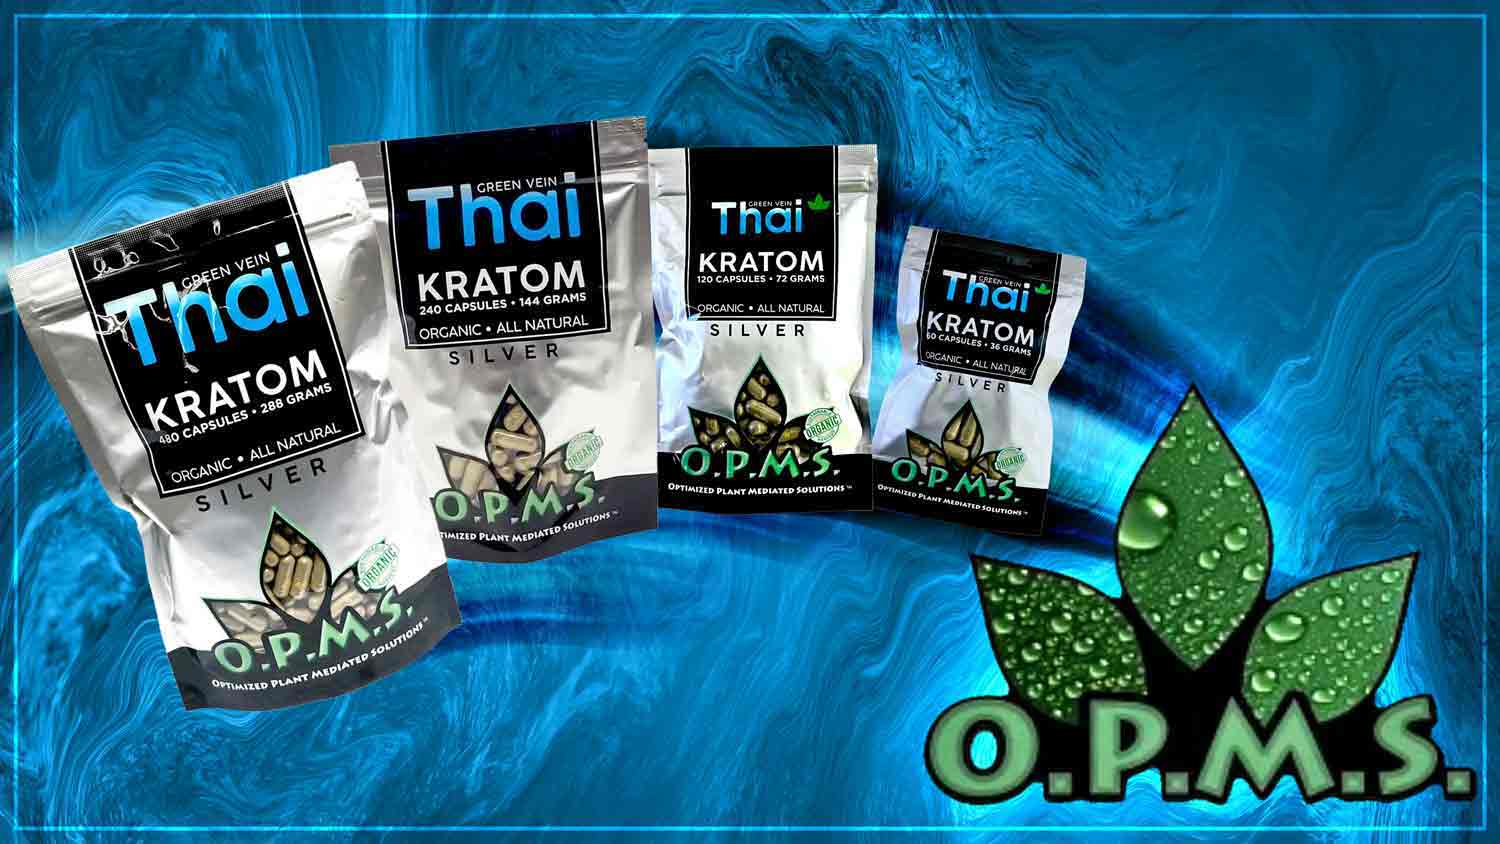 OPMS Silver Green Vein Thai Kratom Capsules 